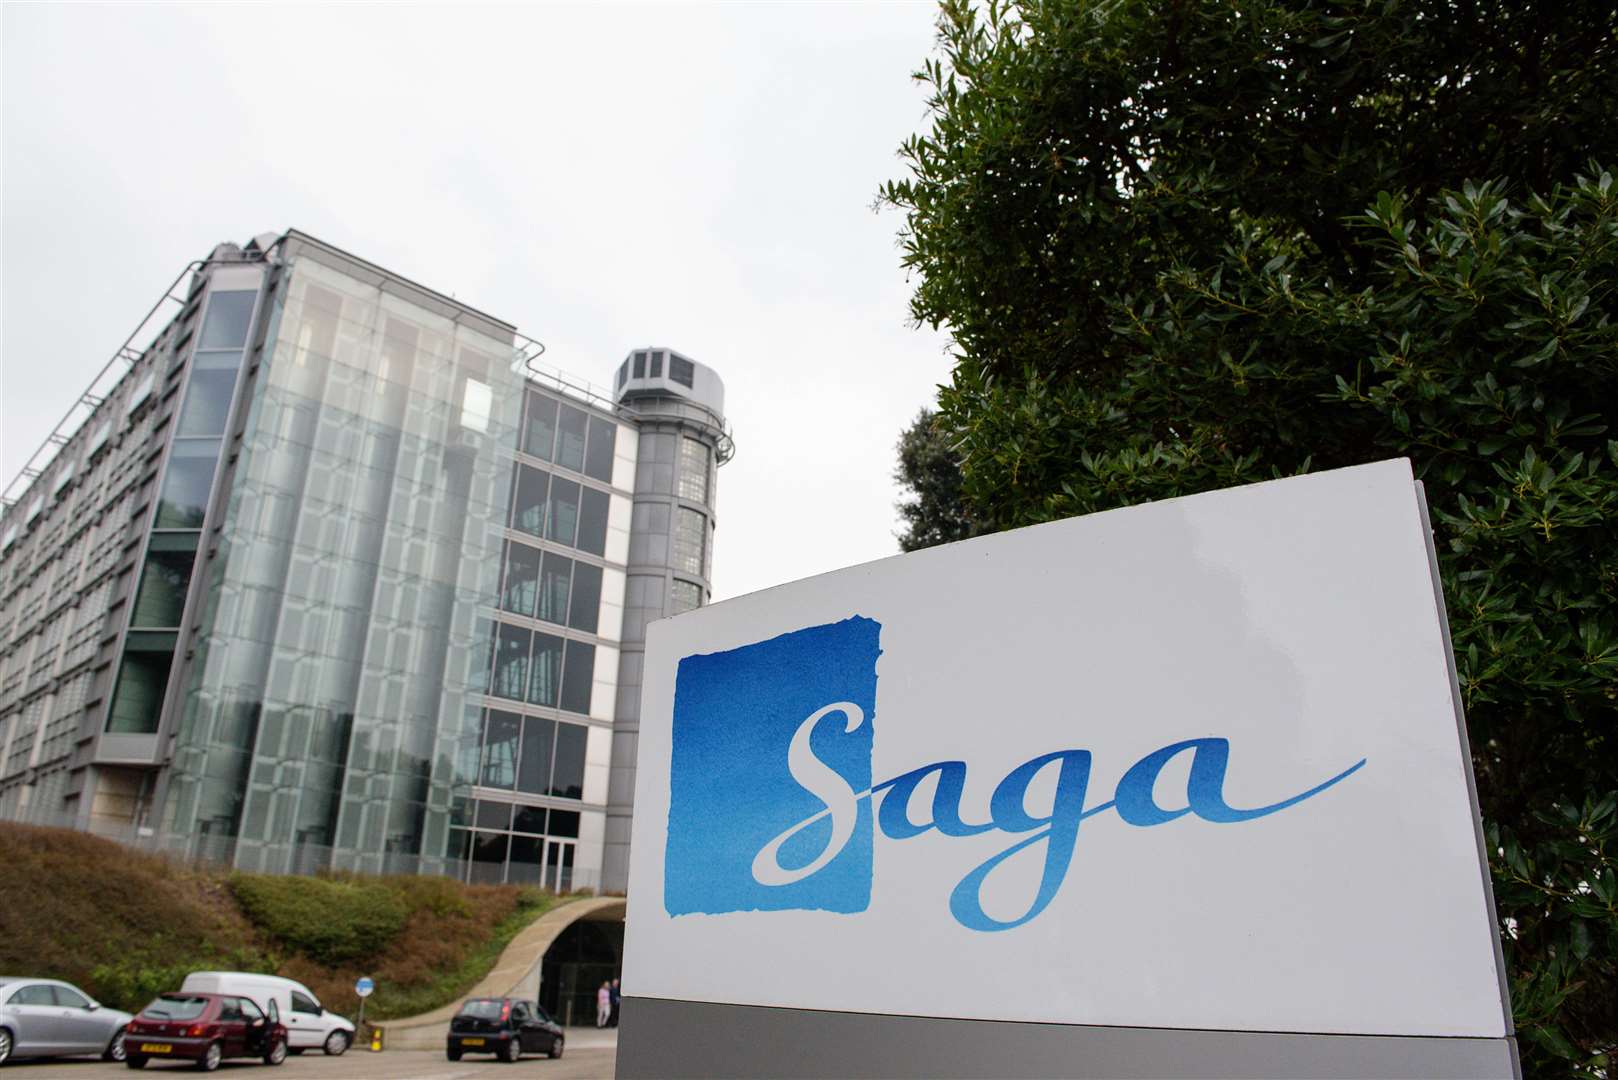 The Saga building in Sandgate